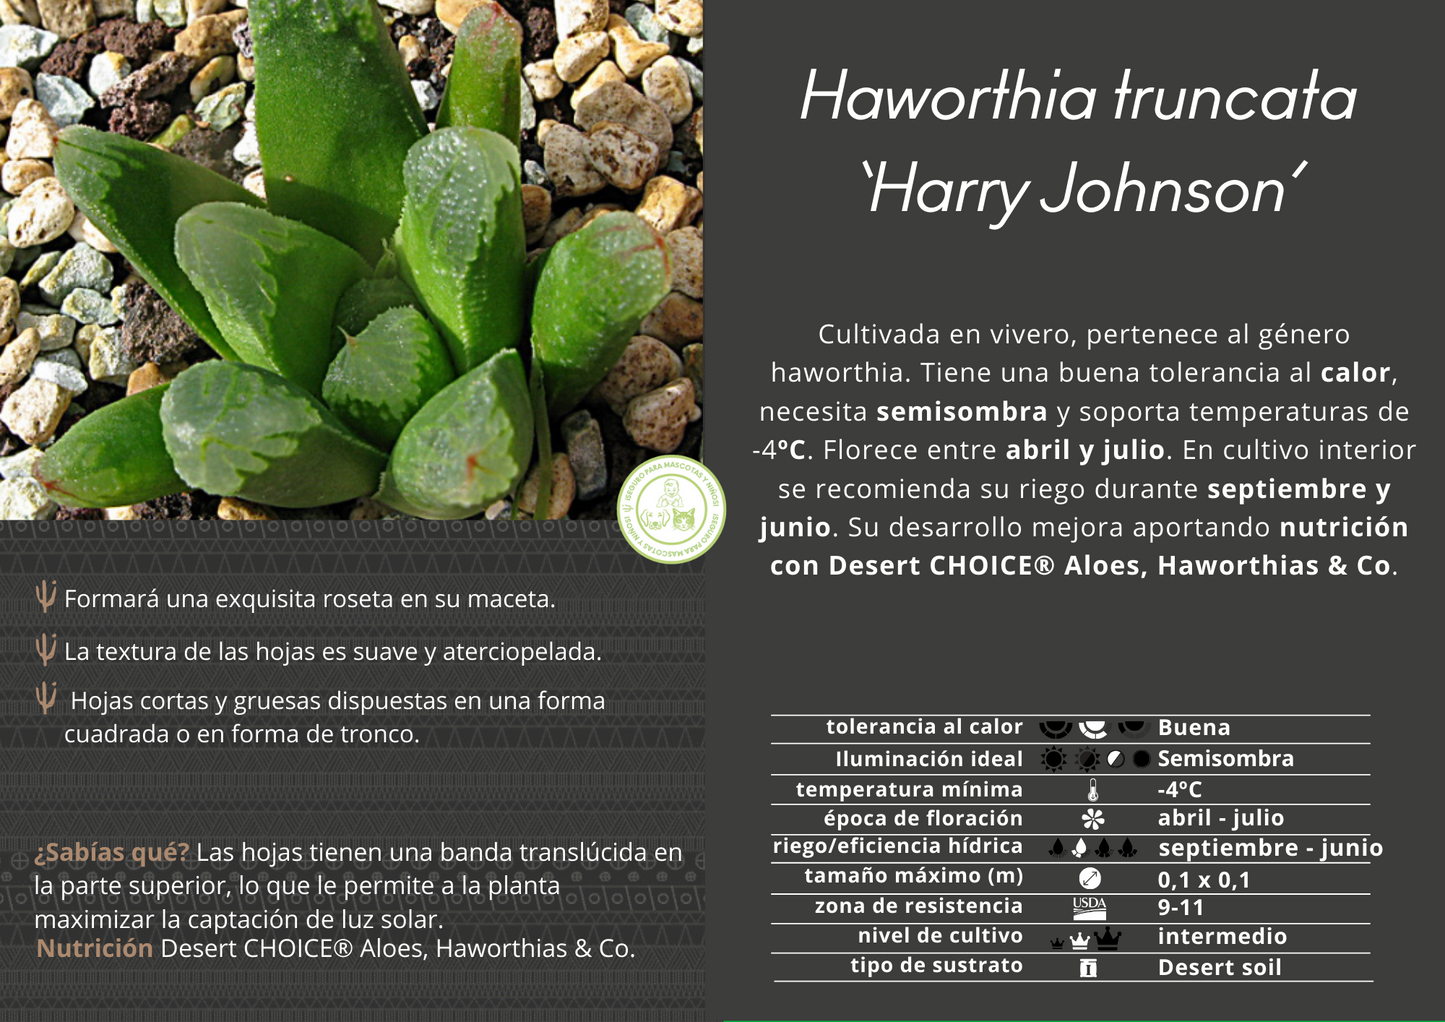 Haworthia truncata 'Harry Johnson'